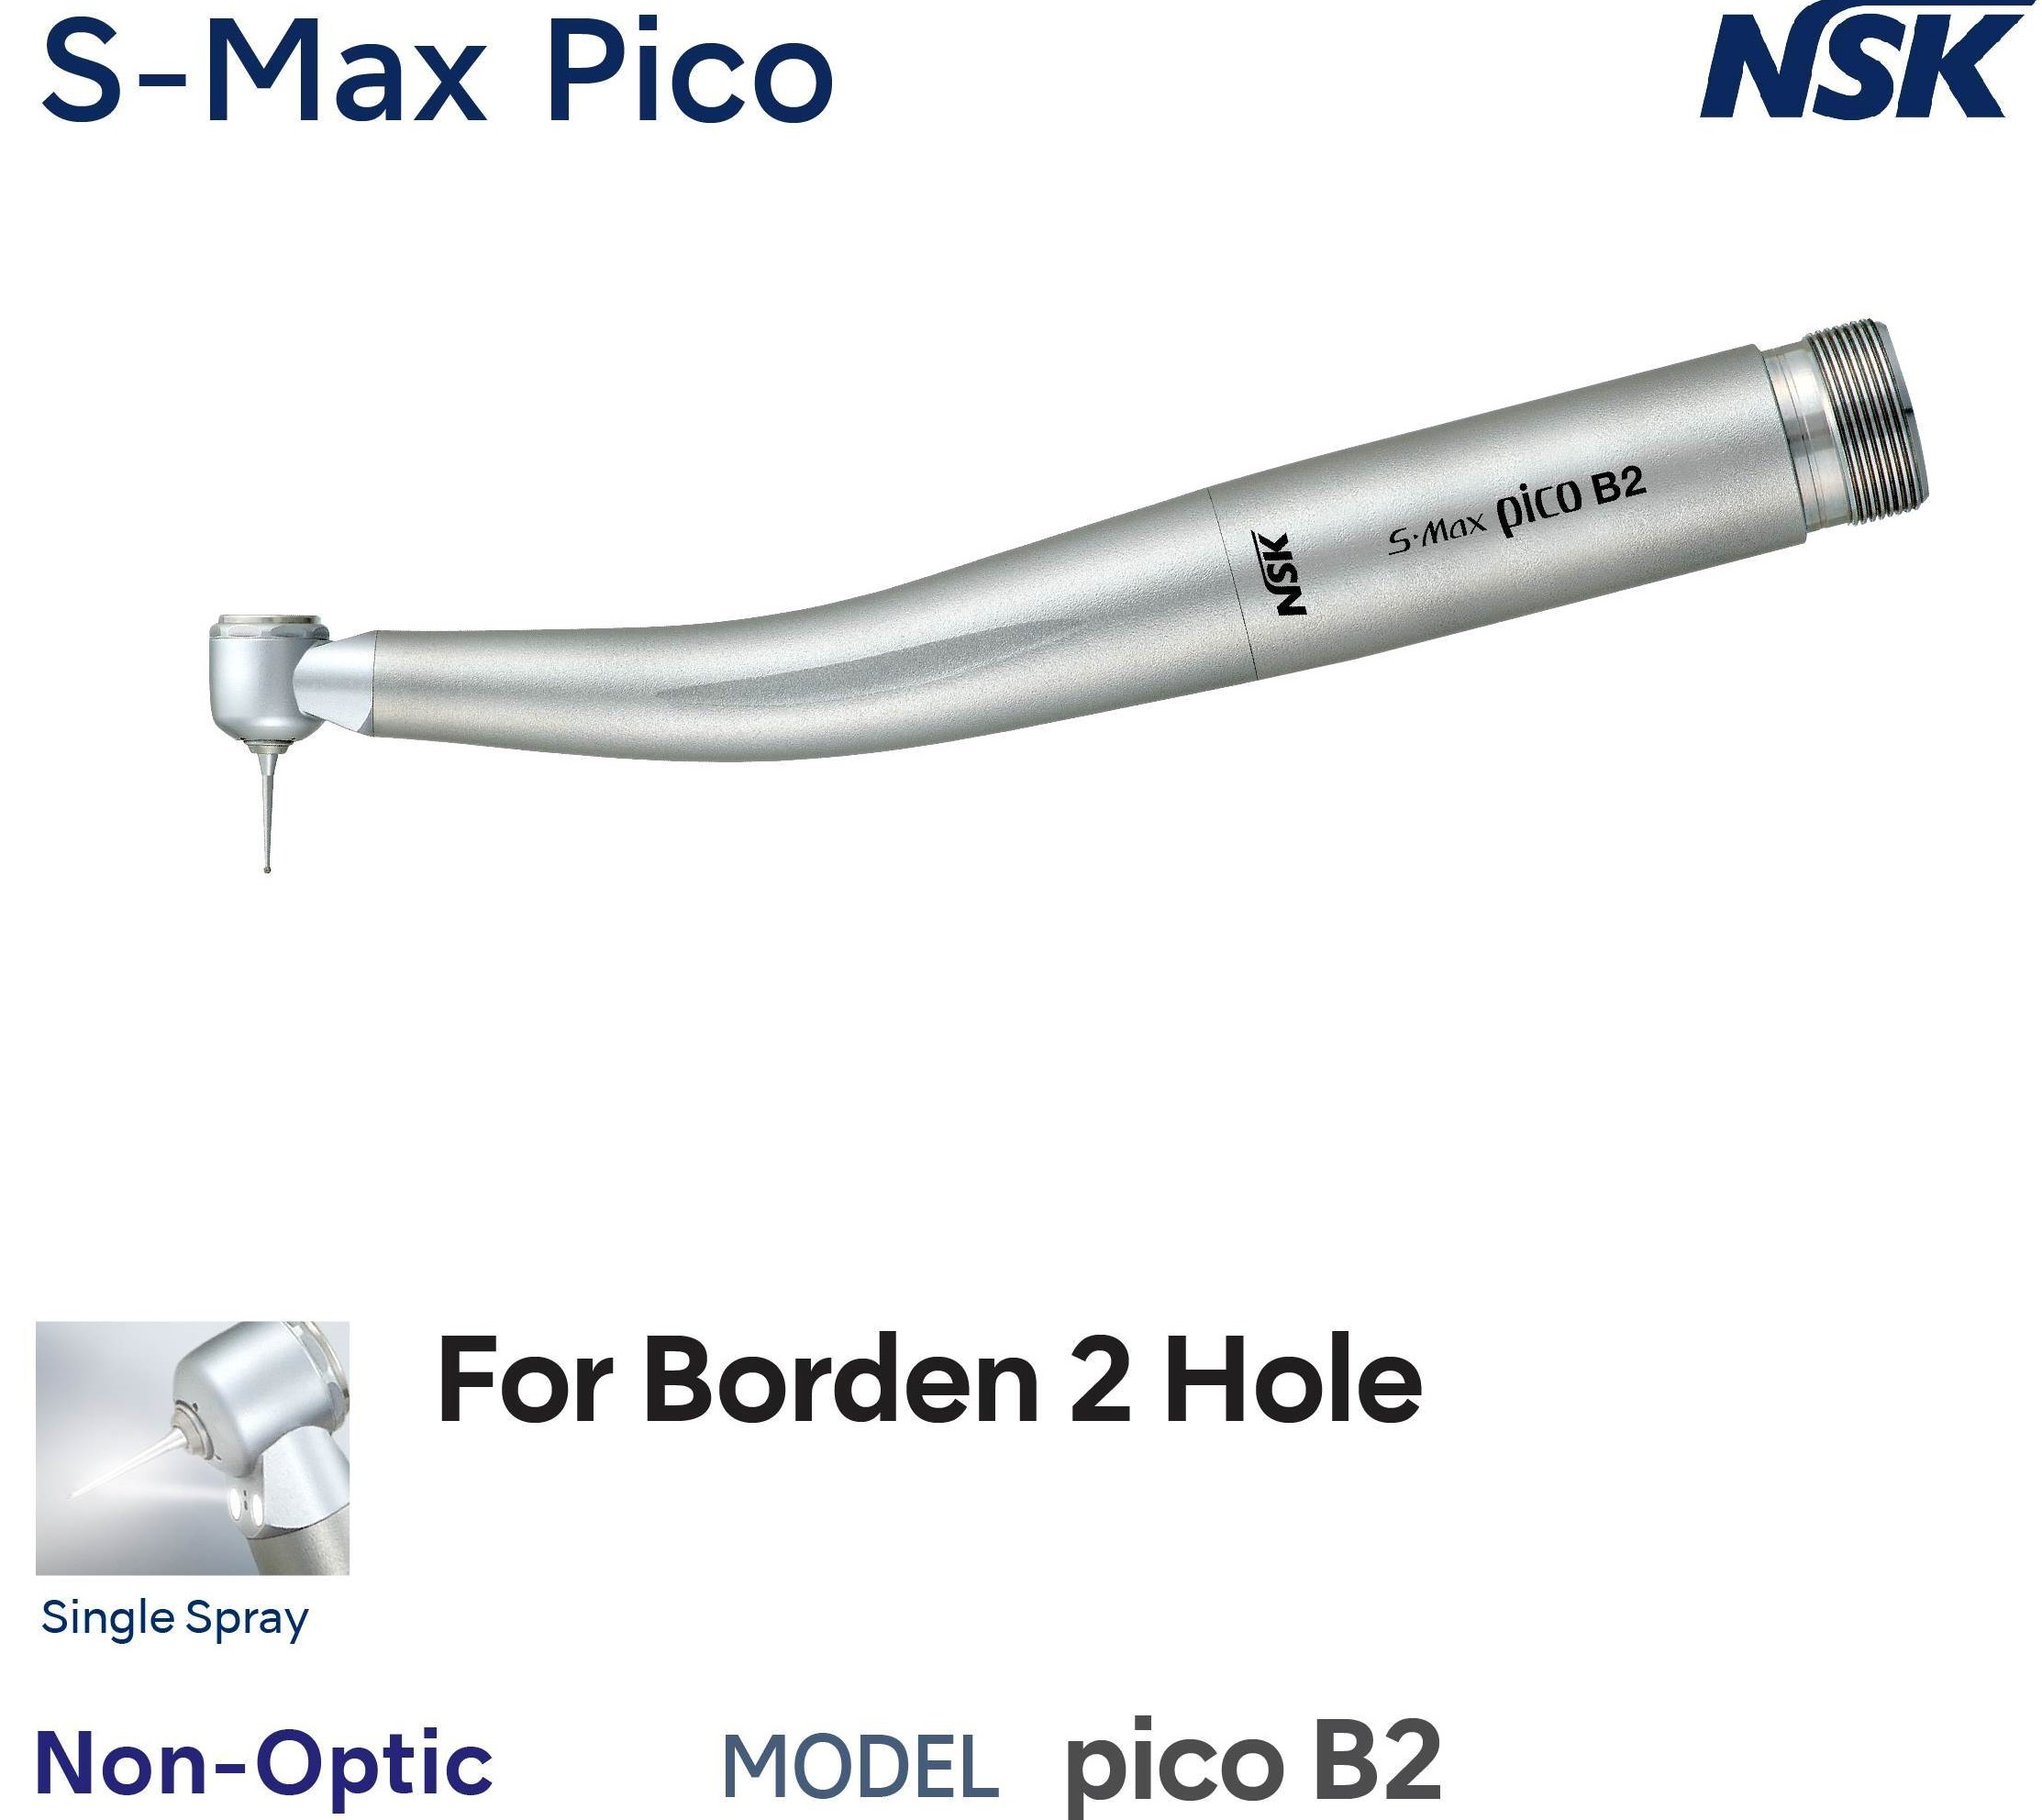 NSK Smax Pico Airotor Handpiece Non Optic